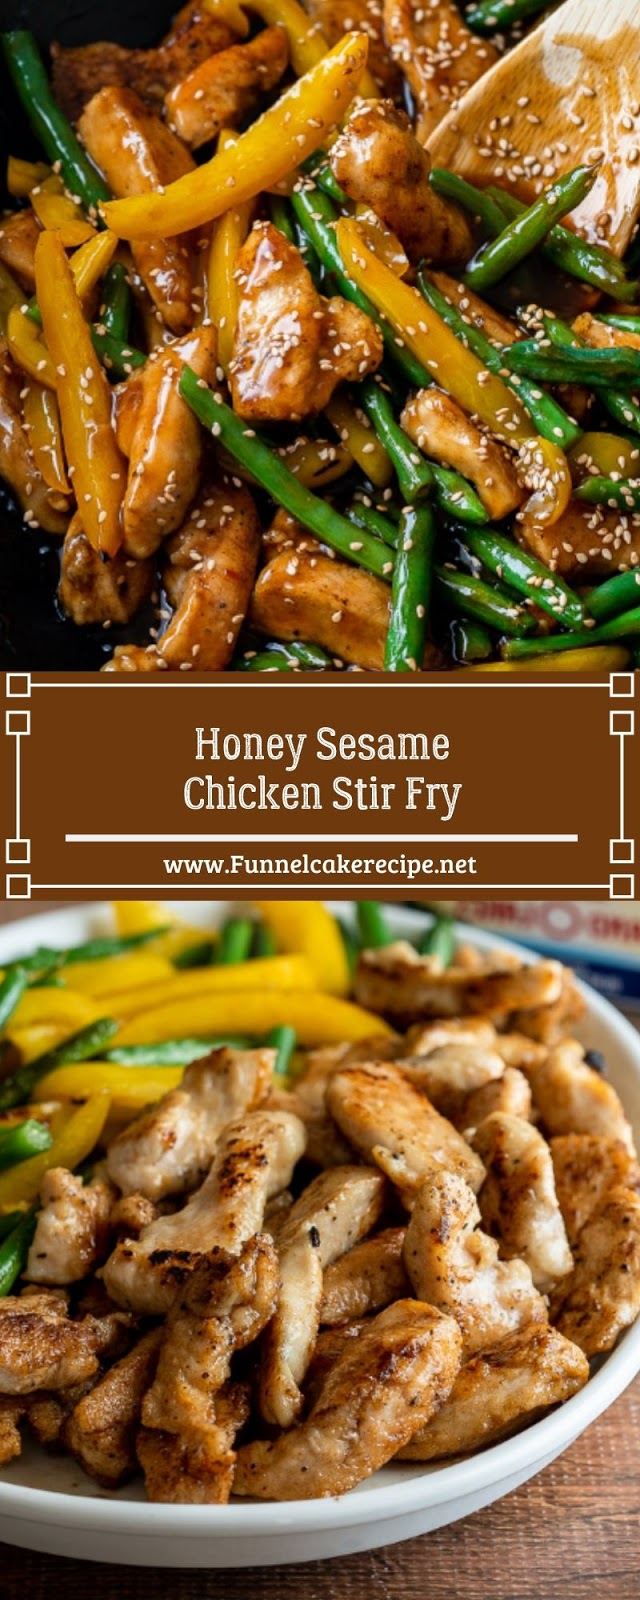 Honey Sesame Chicken Stir Fry